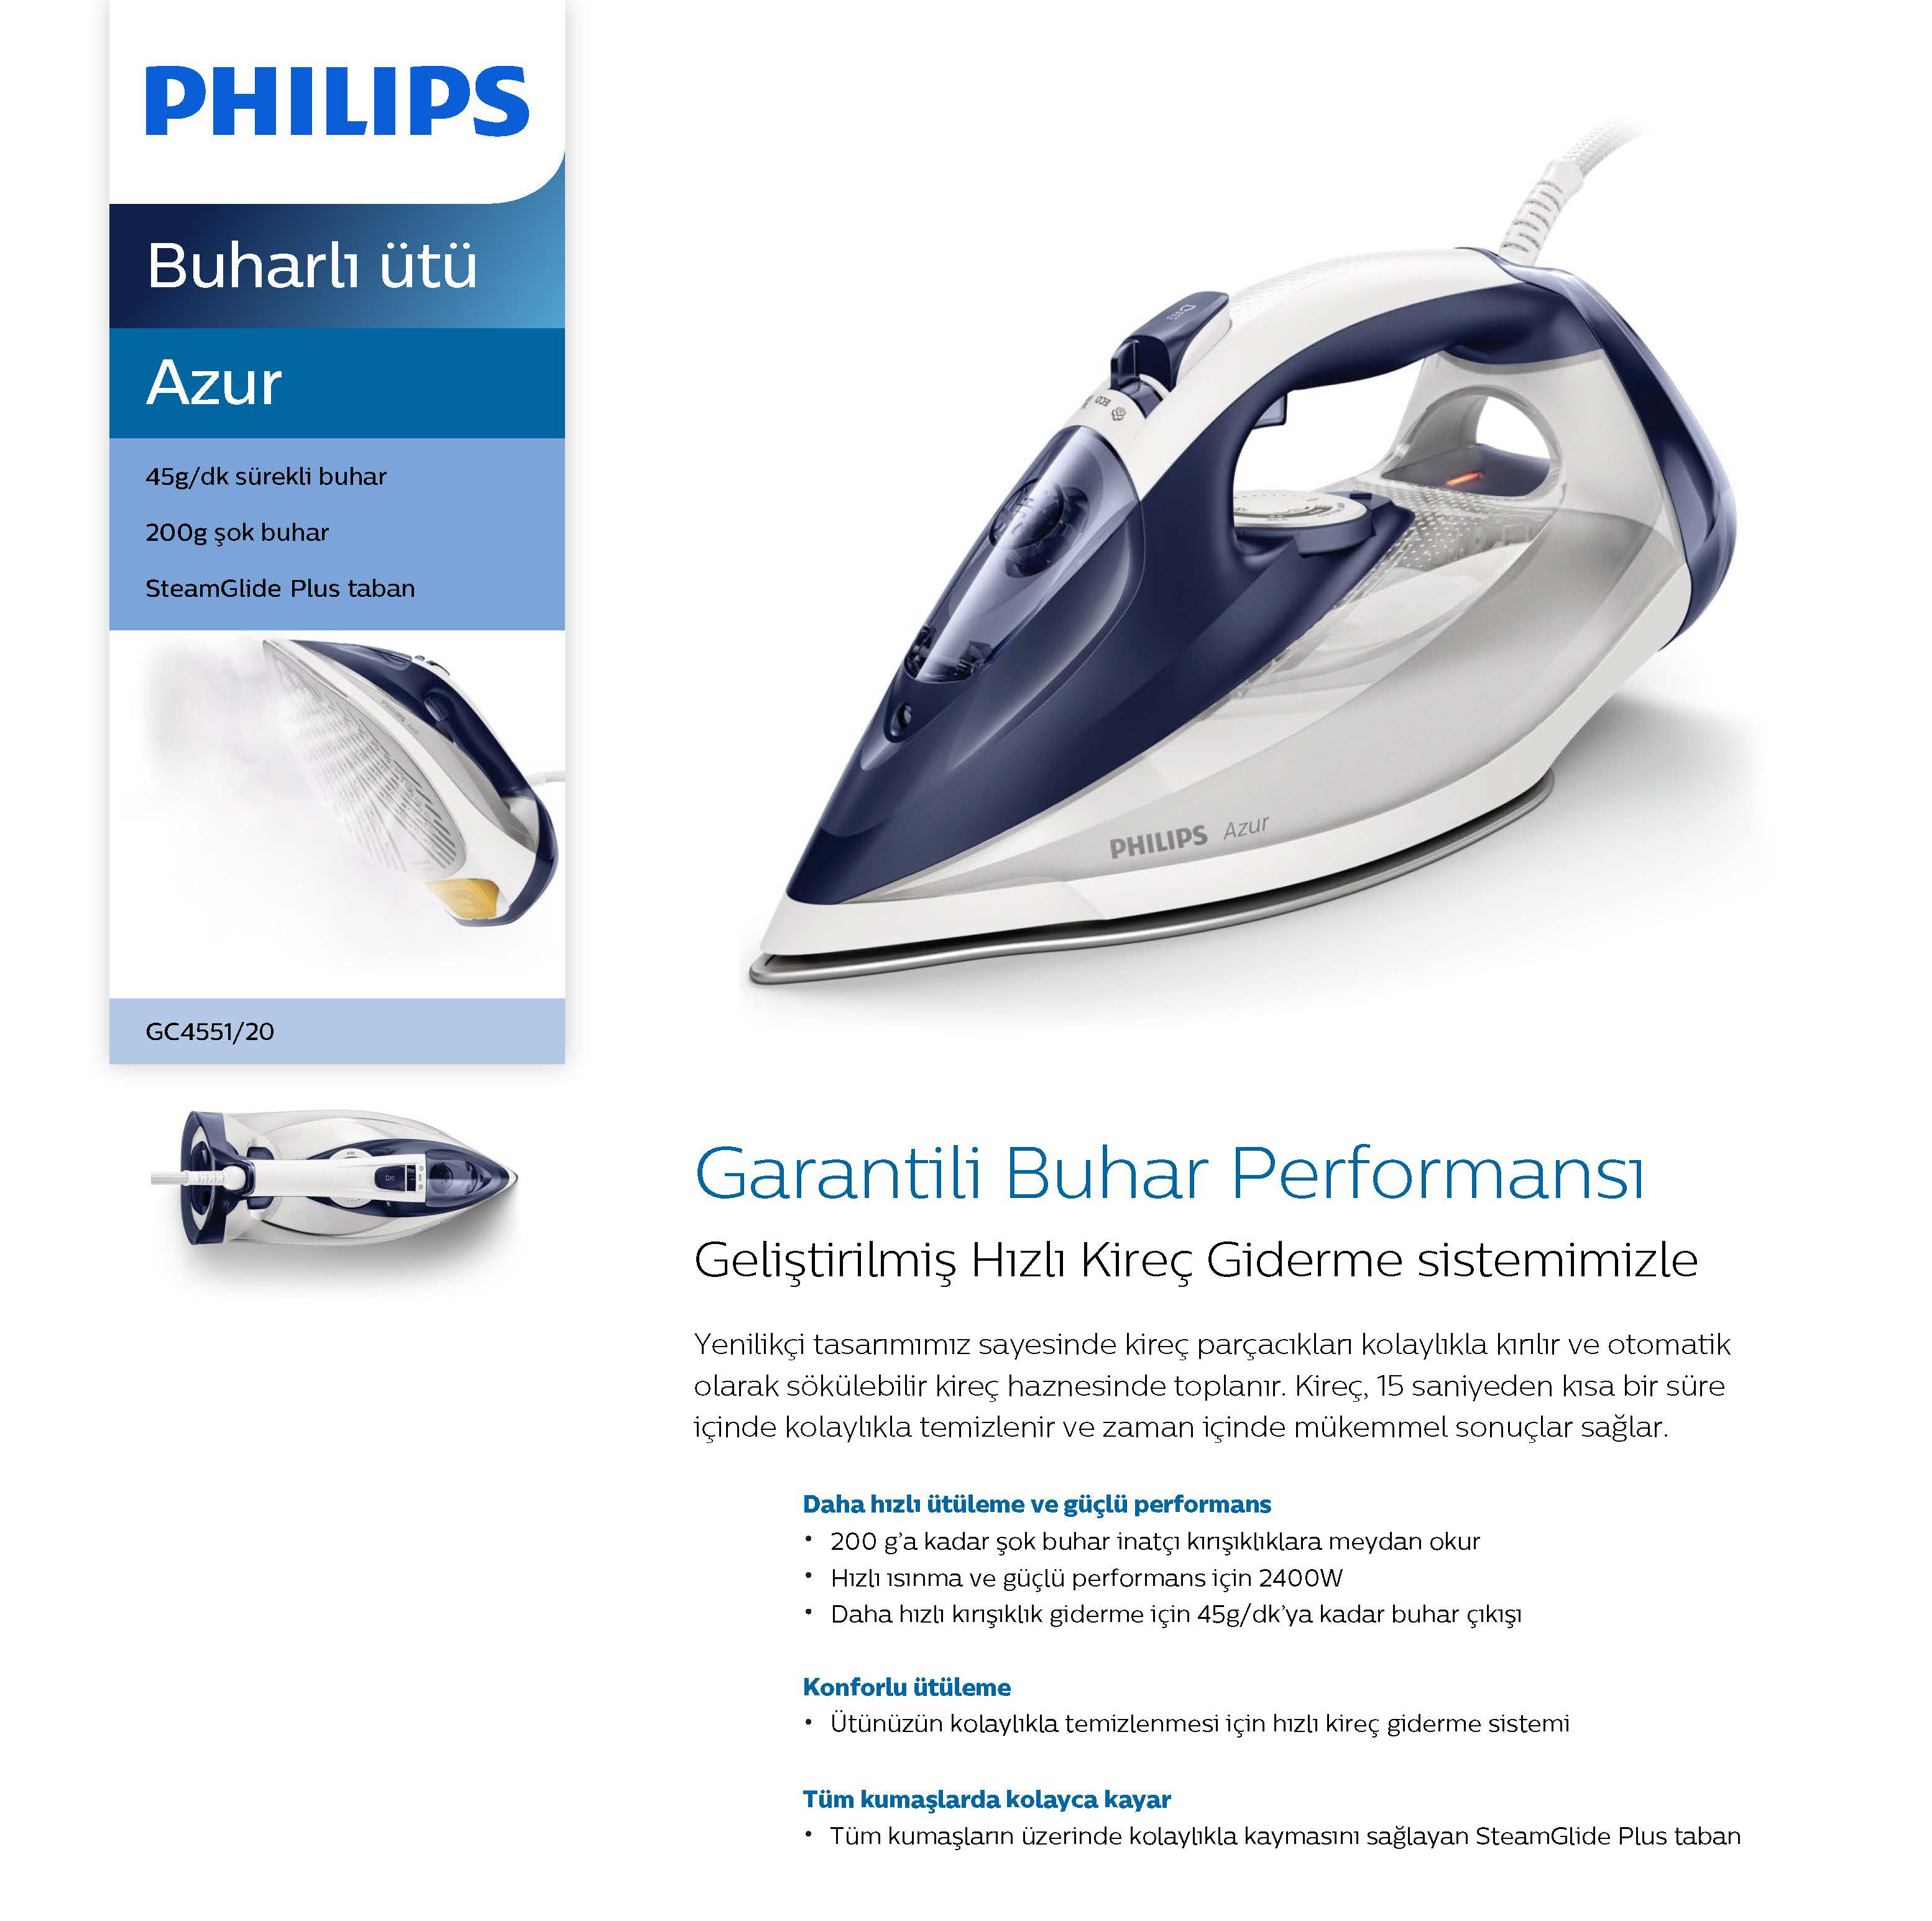 Philips azur инструкция. Philips Azur gc4541/20. Philips Azur 2400w. Утюг Philips Azur Ionic 2400 w. Утюг Филипс Азур 2400w.